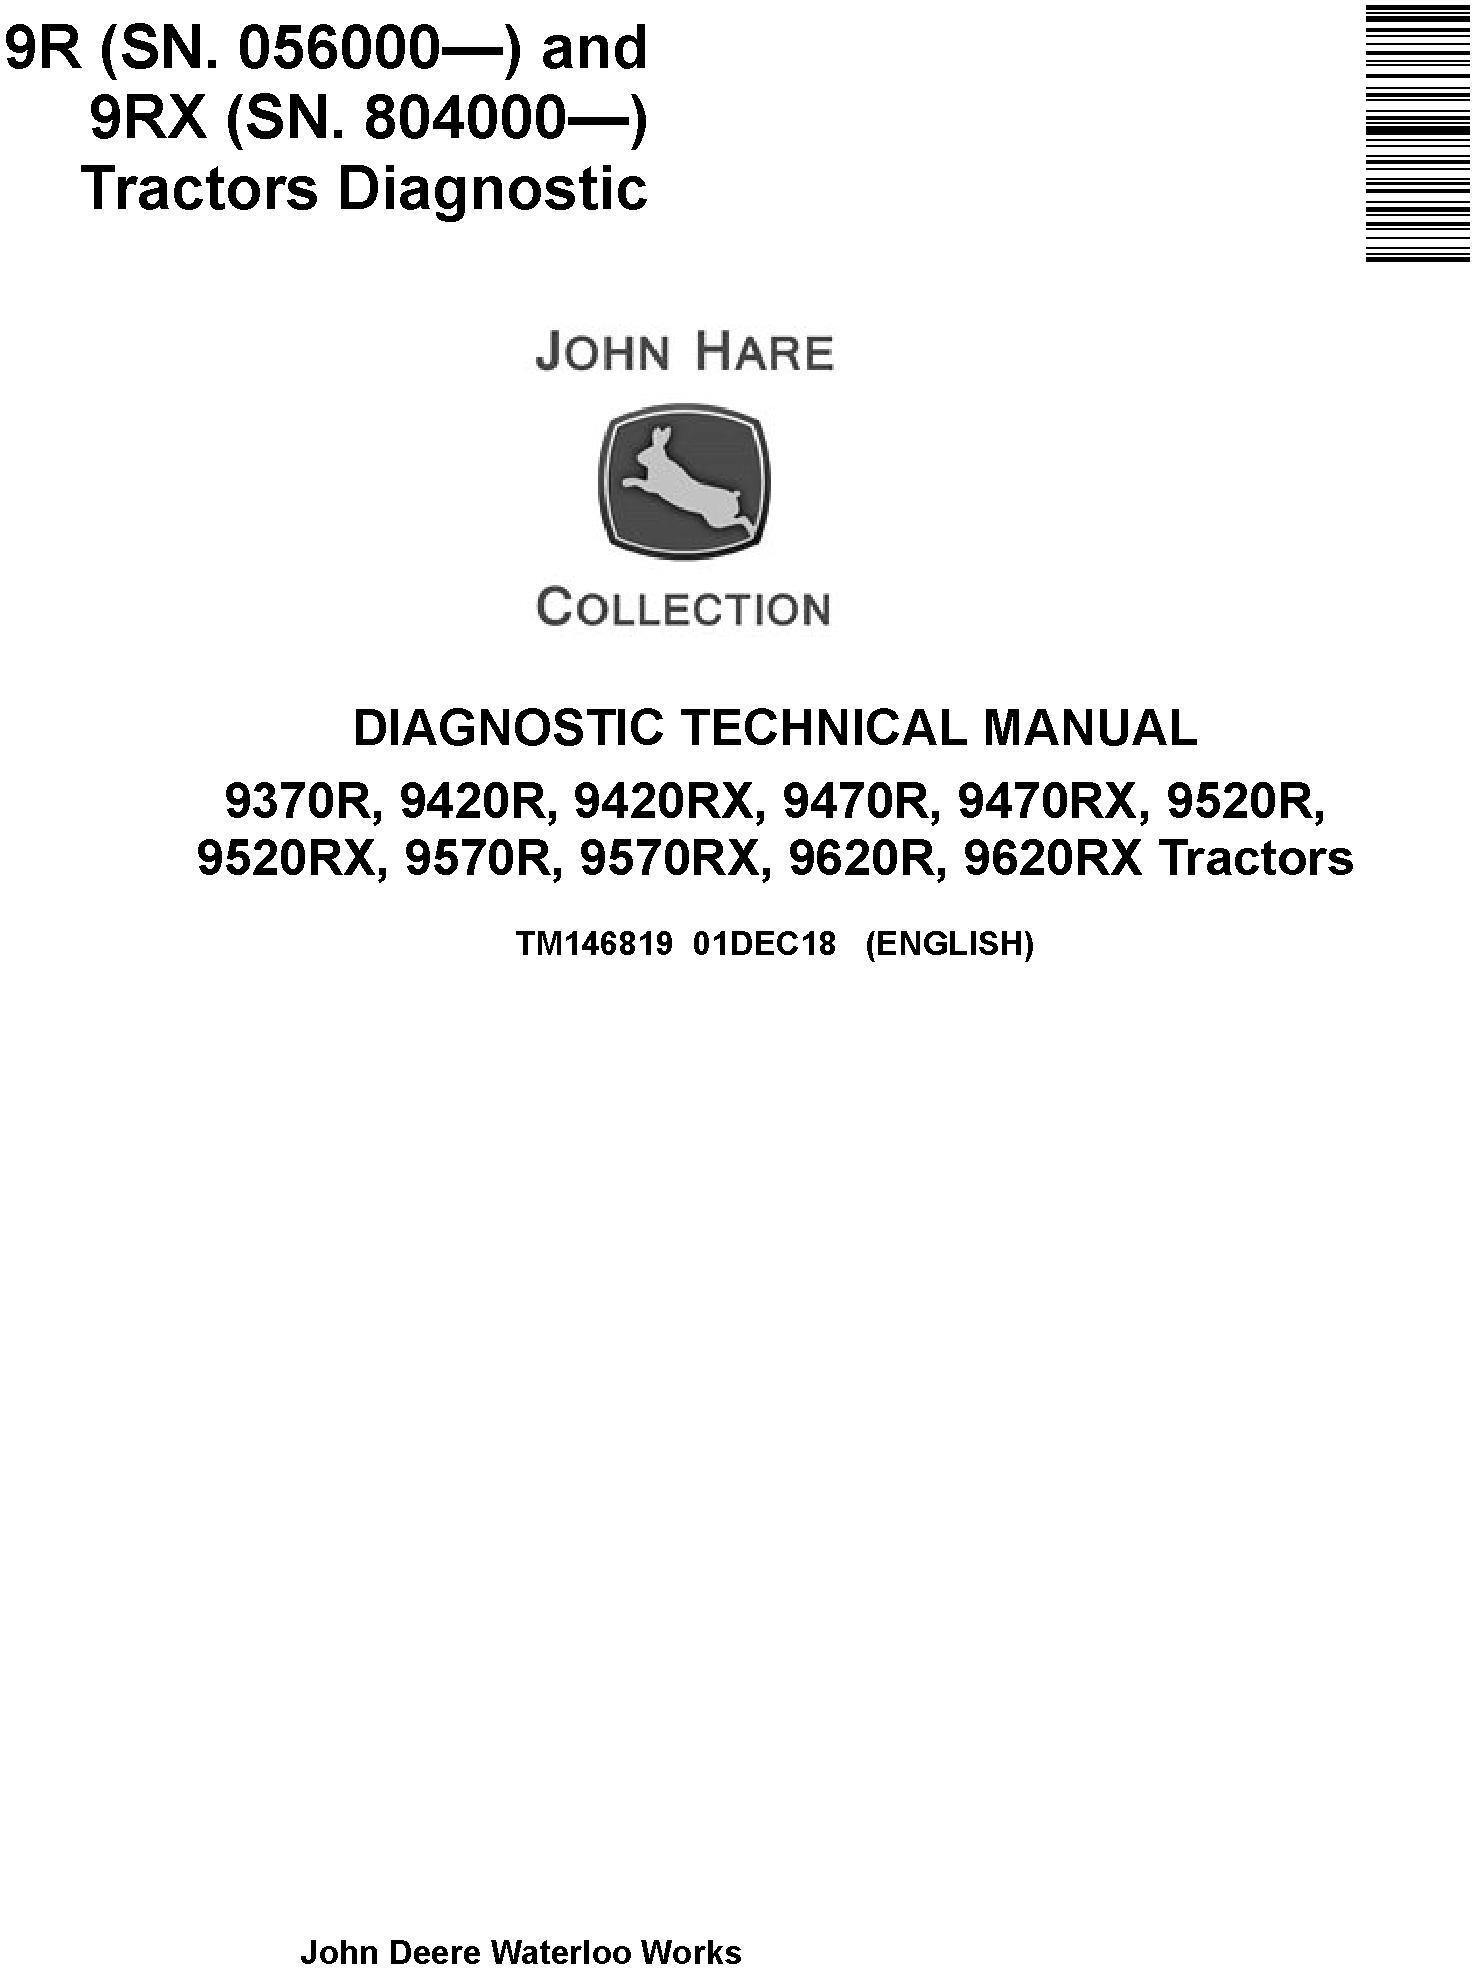 John Deere 9370R to 9620RX Tractor Diagnostic Technical Manual TM146819